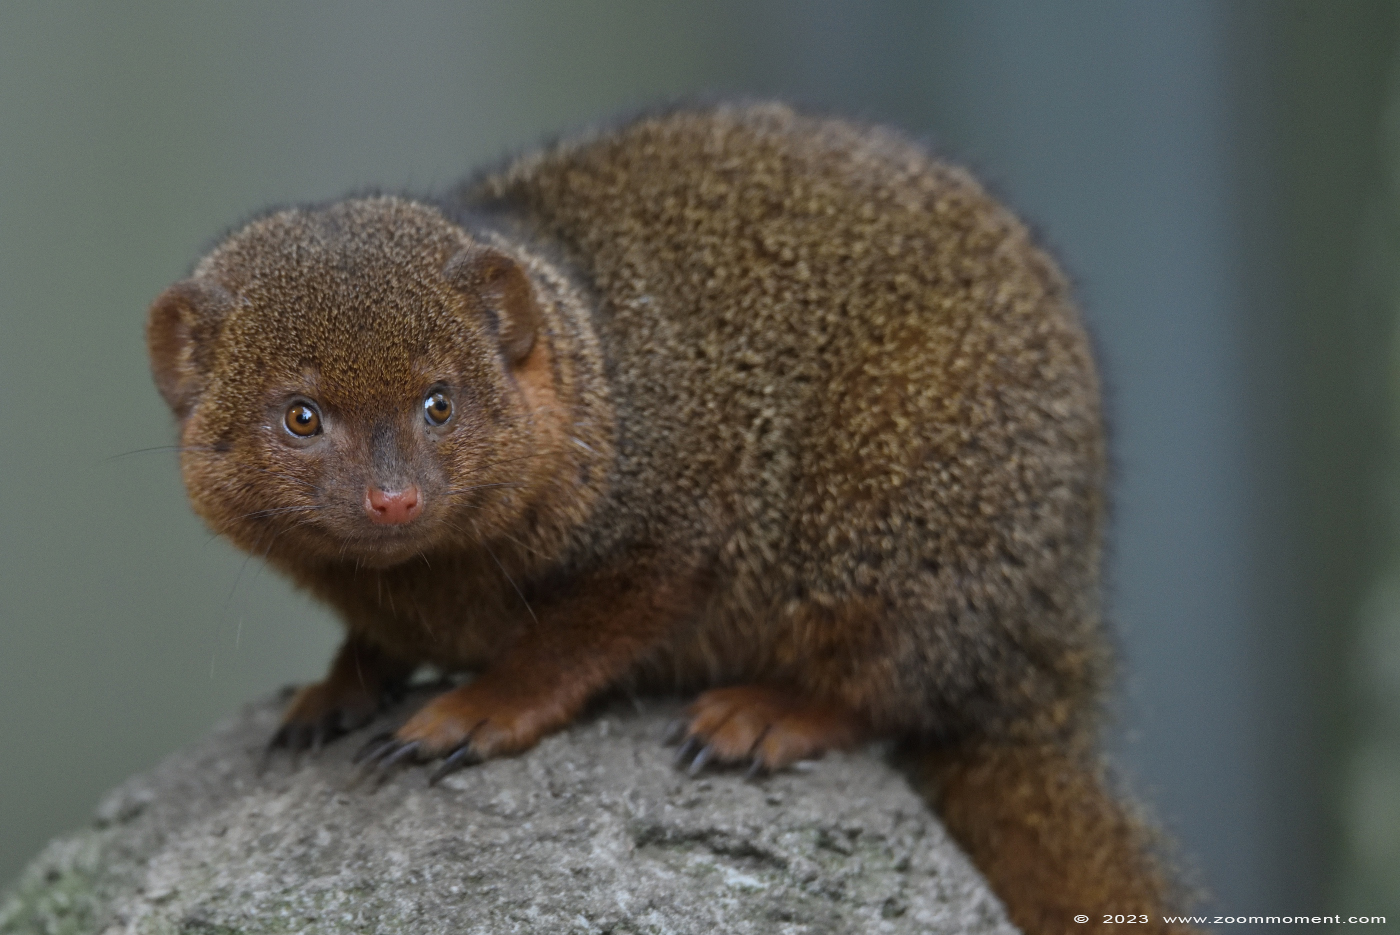 dwergmangoest ( Helogale parvula )  common dwarf mongoose
Trefwoorden: Ziezoo Volkel Nederland dwergmangoest Helogale parvula dwarf mongoose